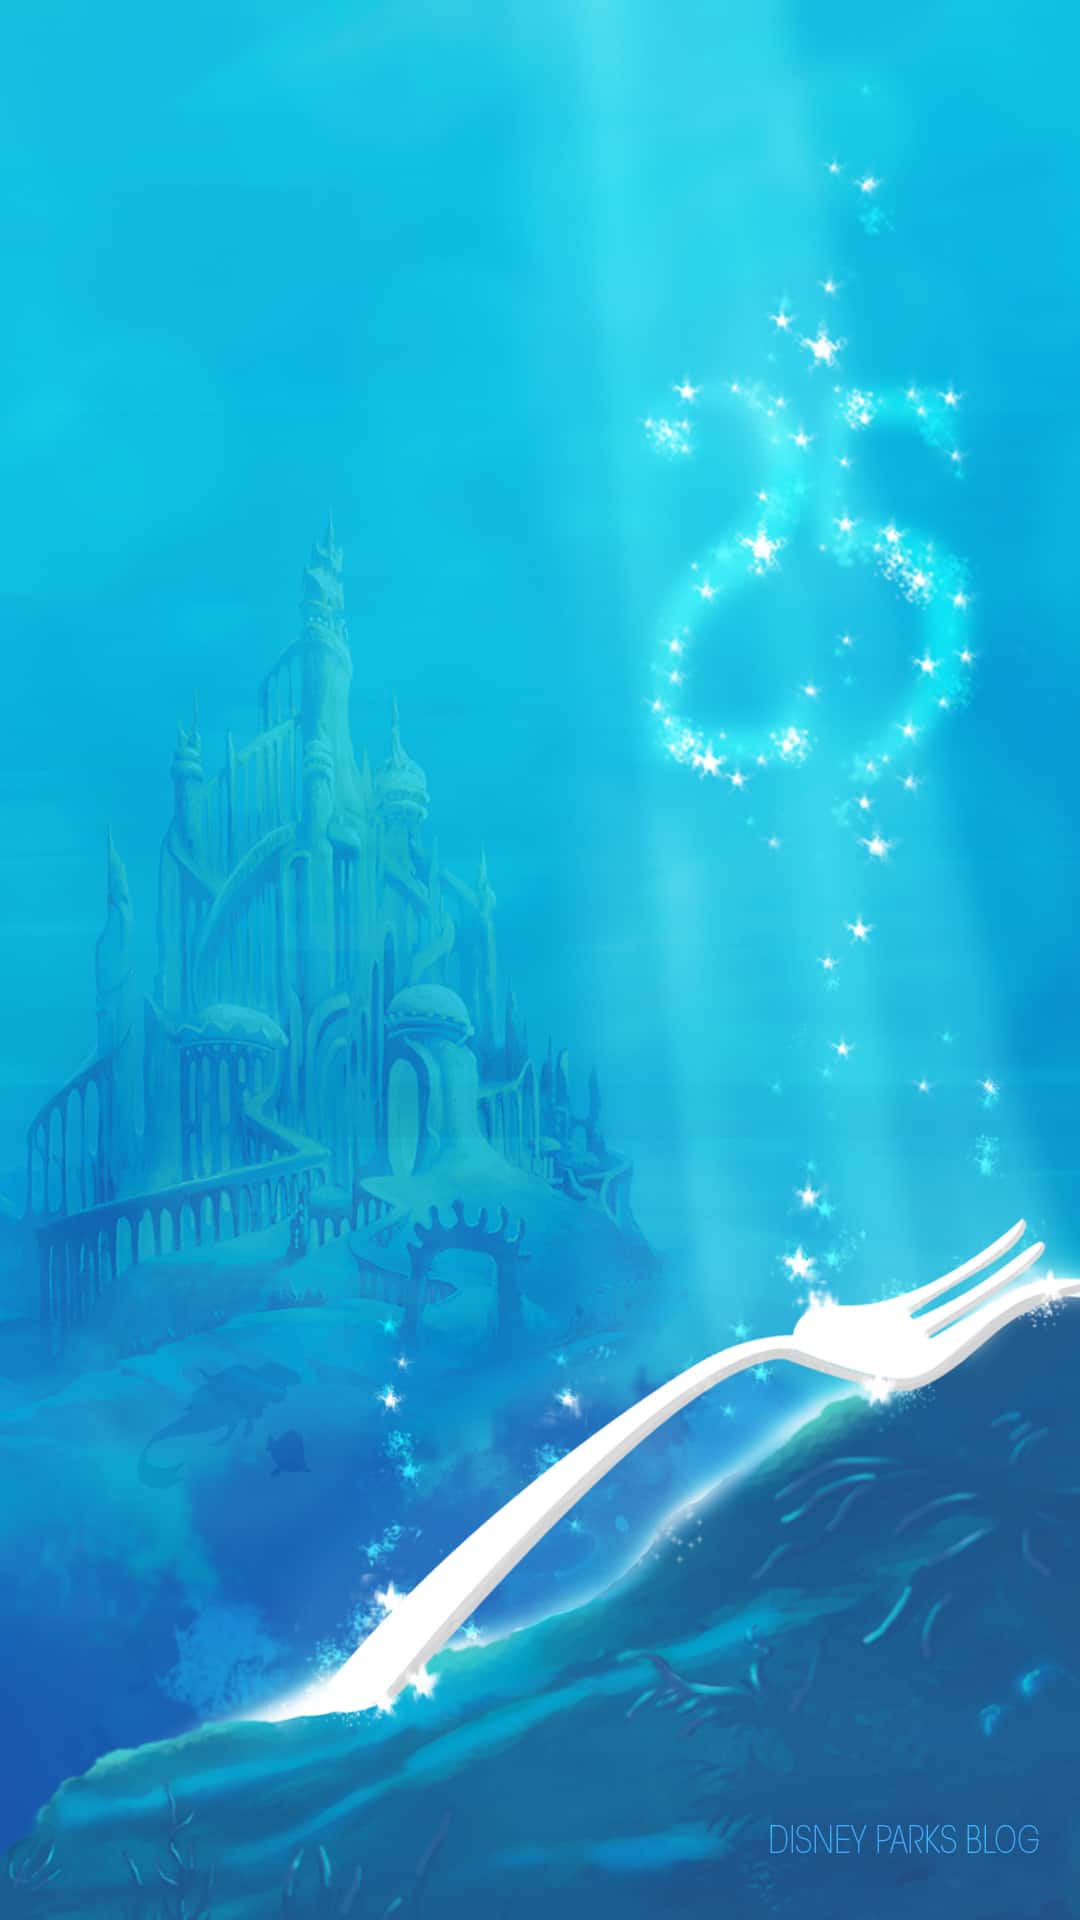 A magical moment from the Little Mermaid ride at Tokyo DisneySea - Mermaid, Ariel